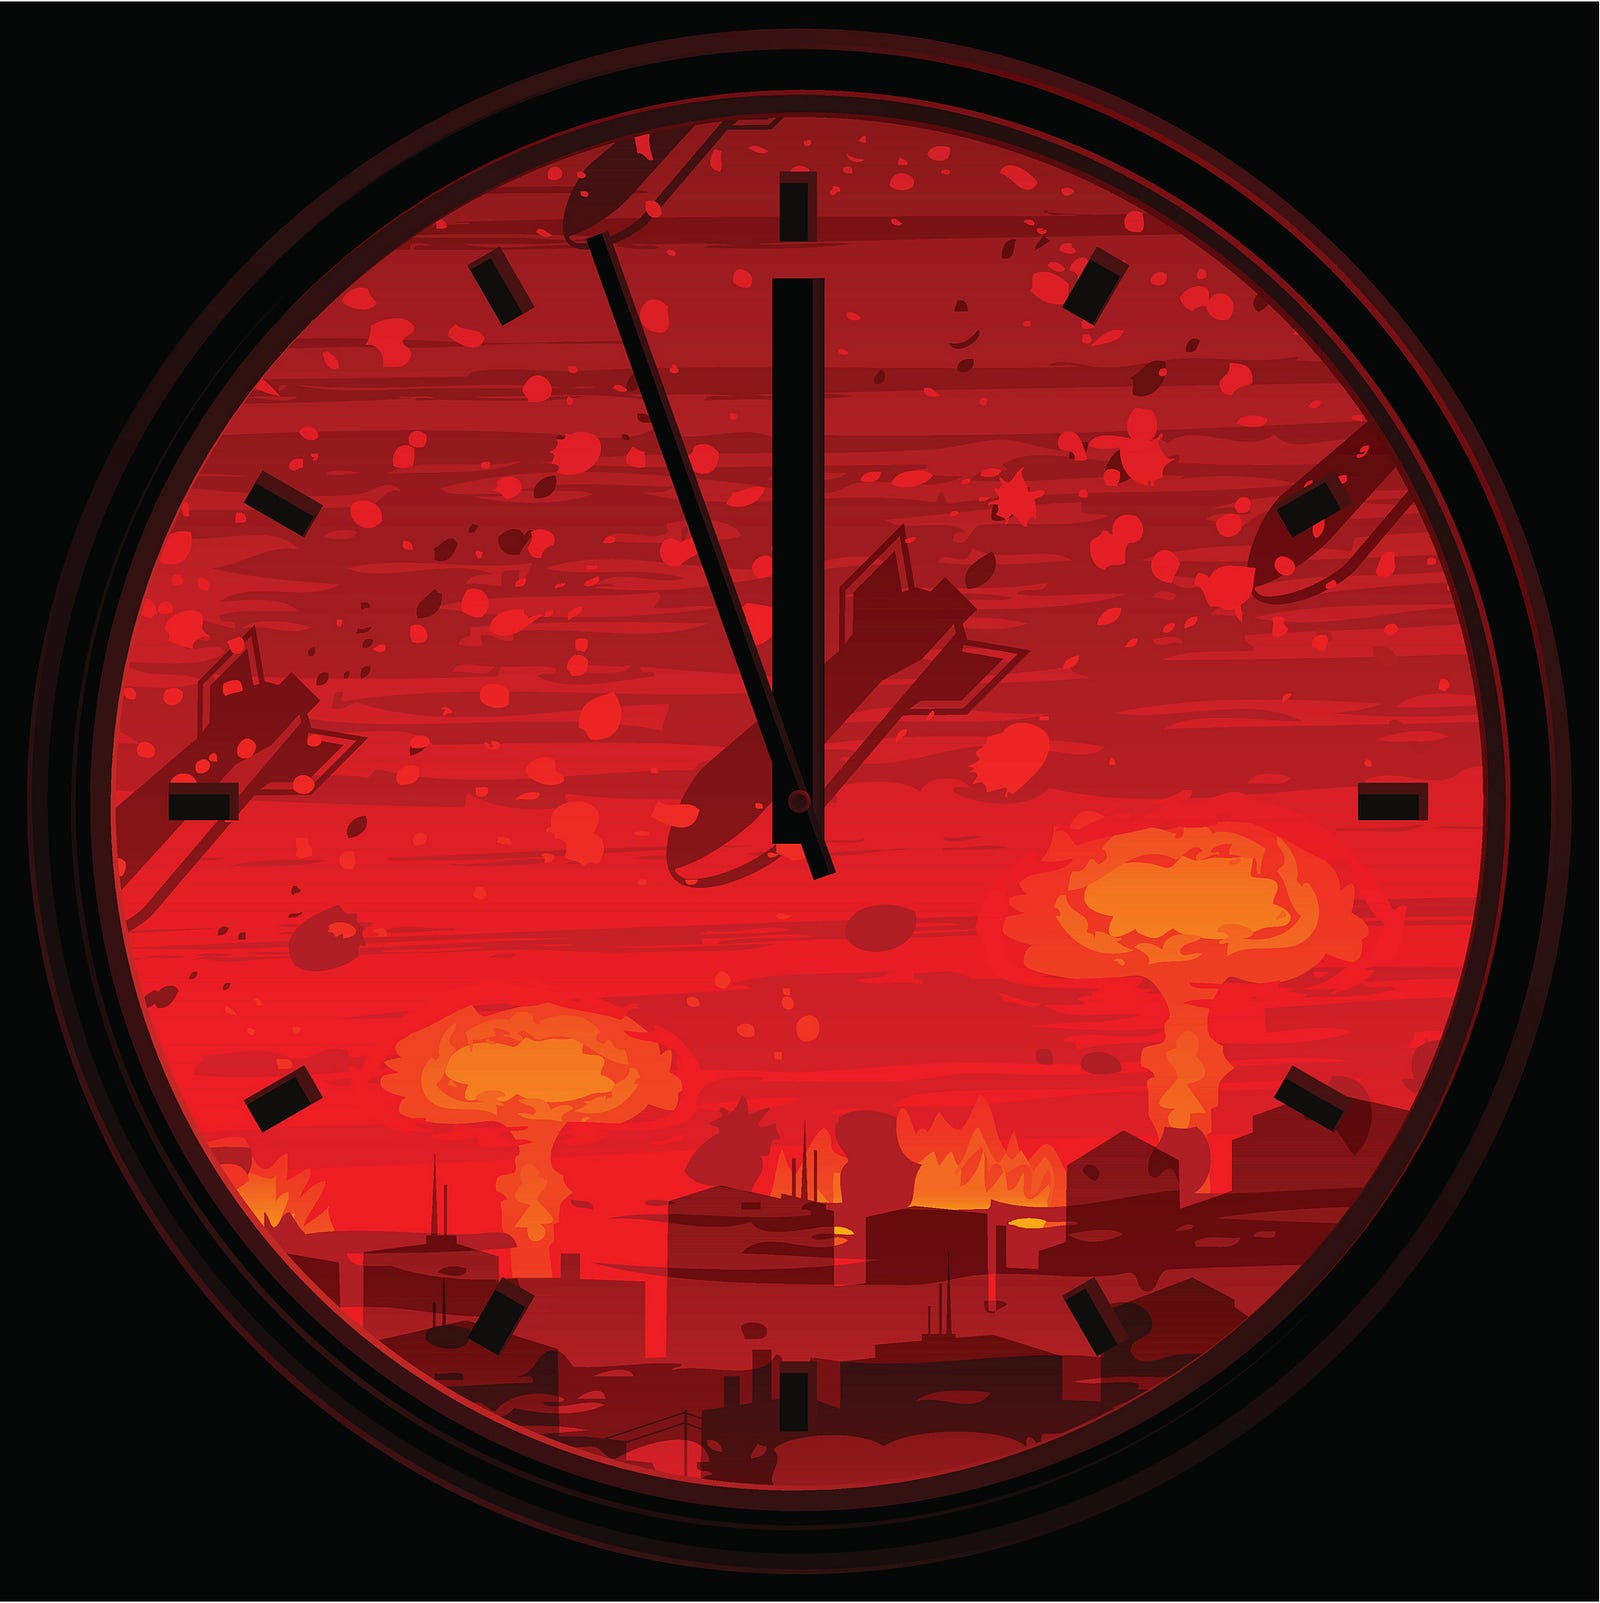 Image result for doomsday clock